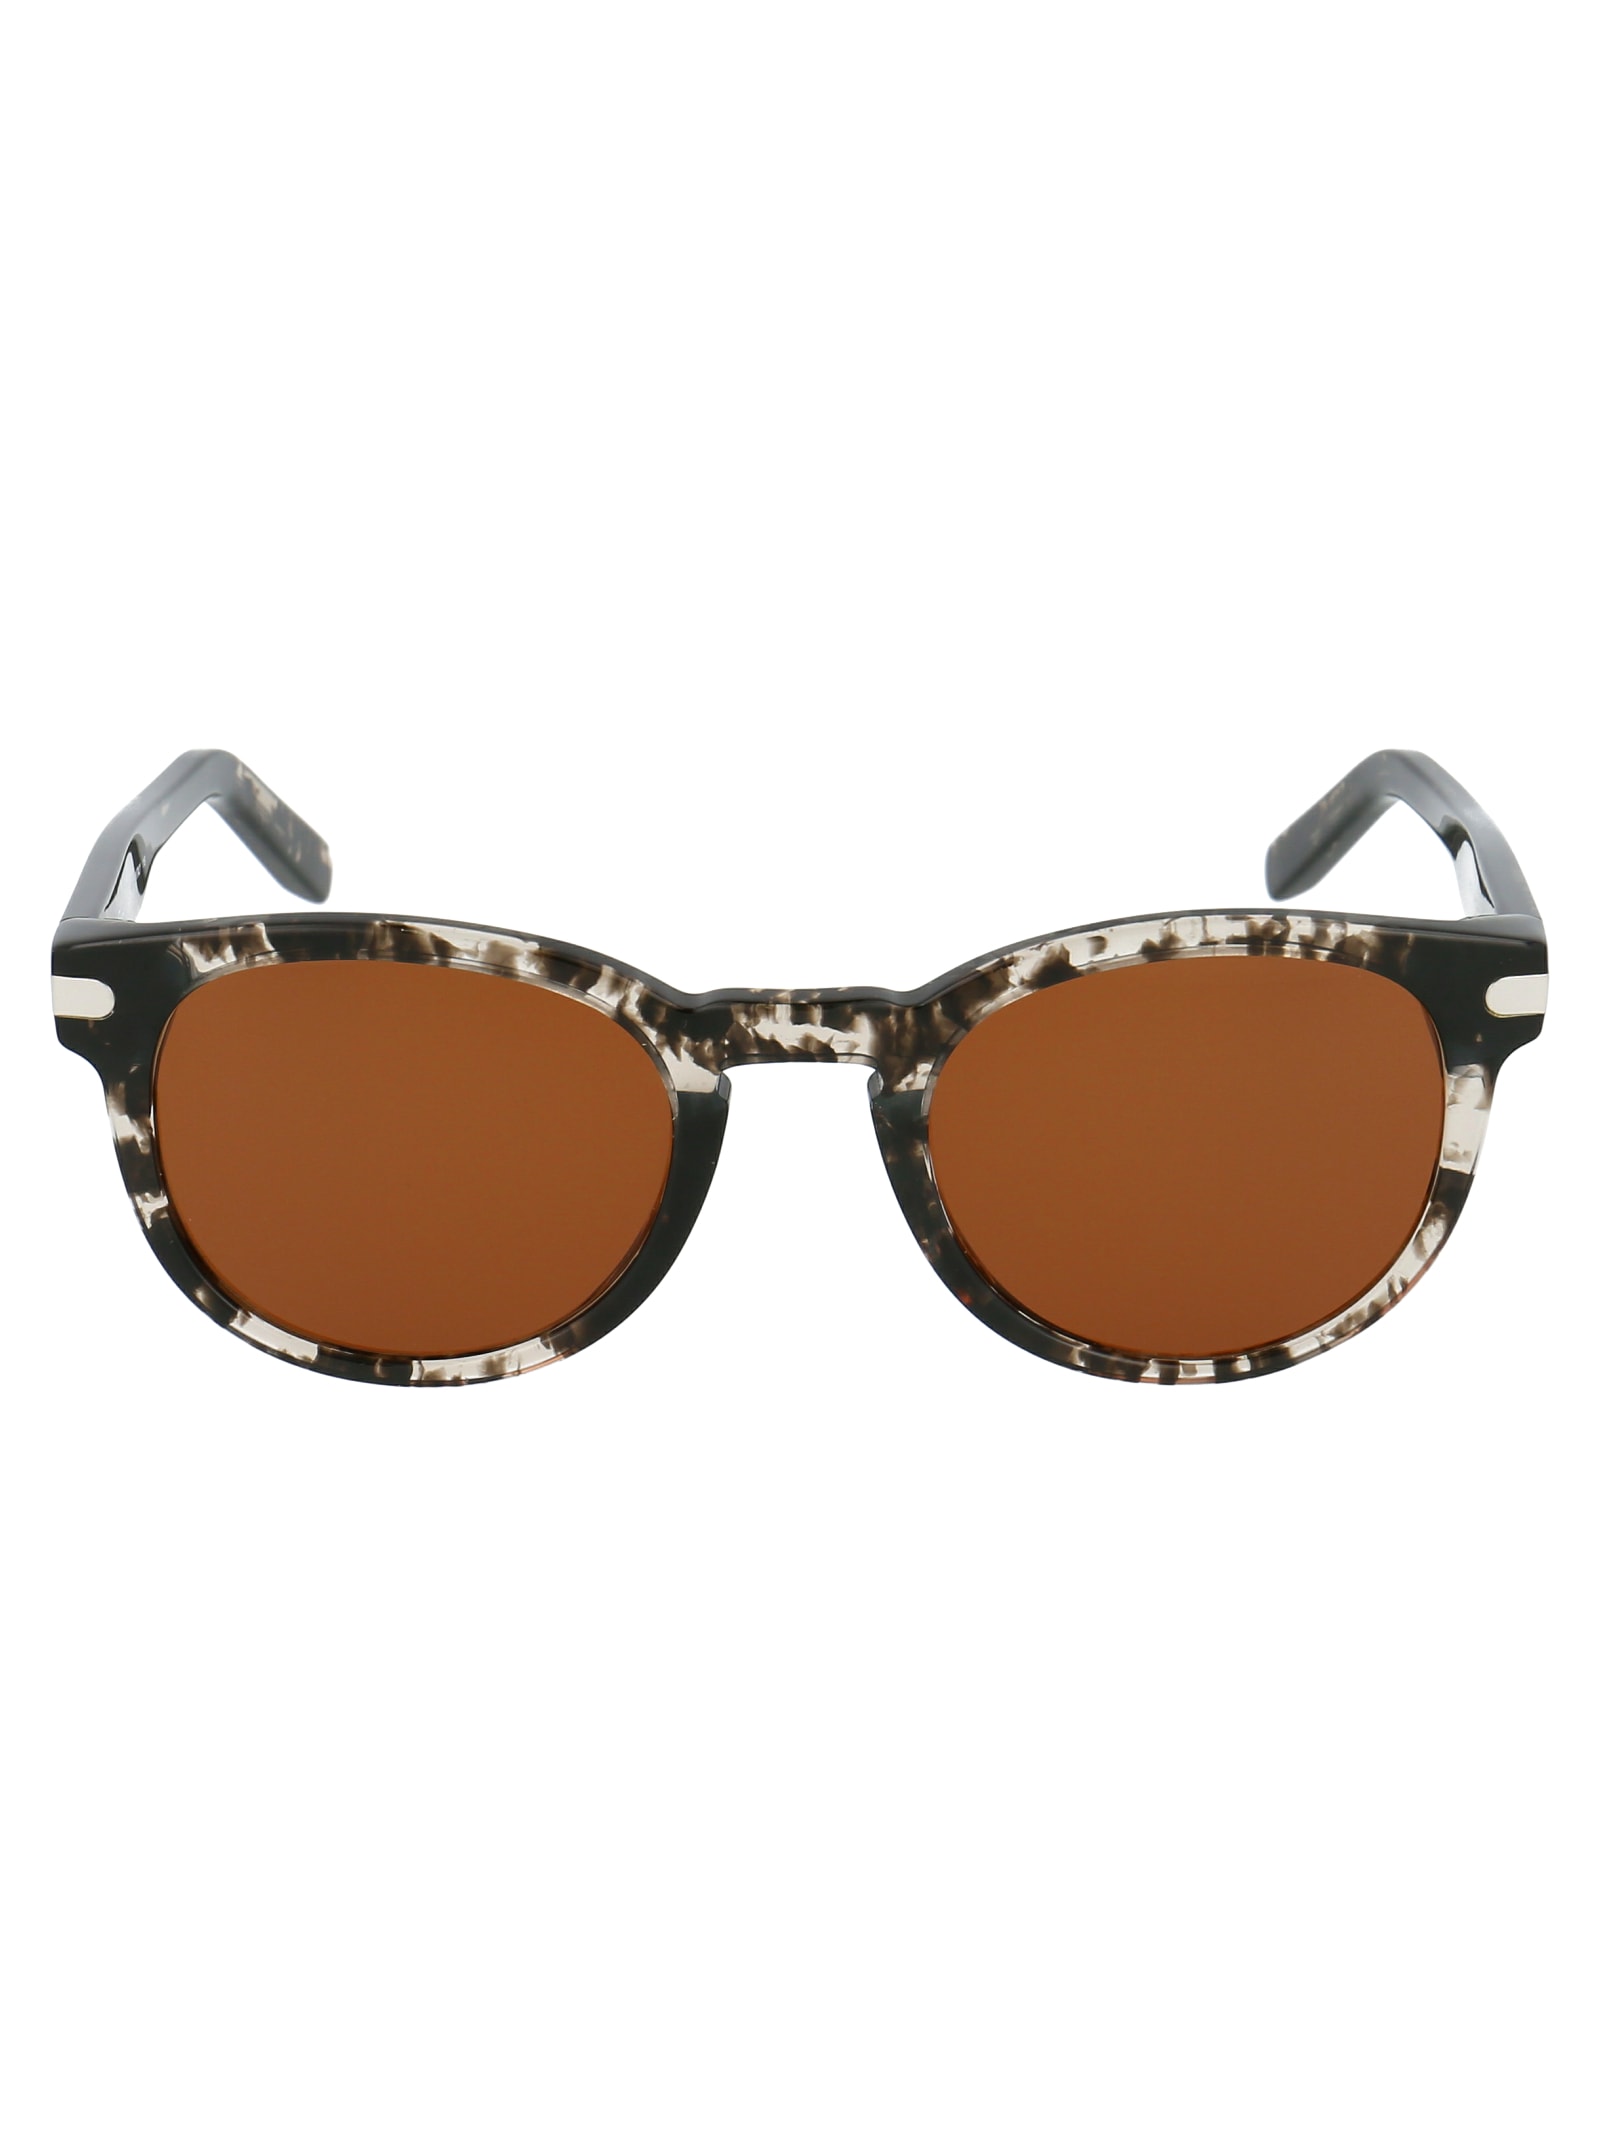 Ferragamo Sf935s Sunglasses In 052 Grey Havana